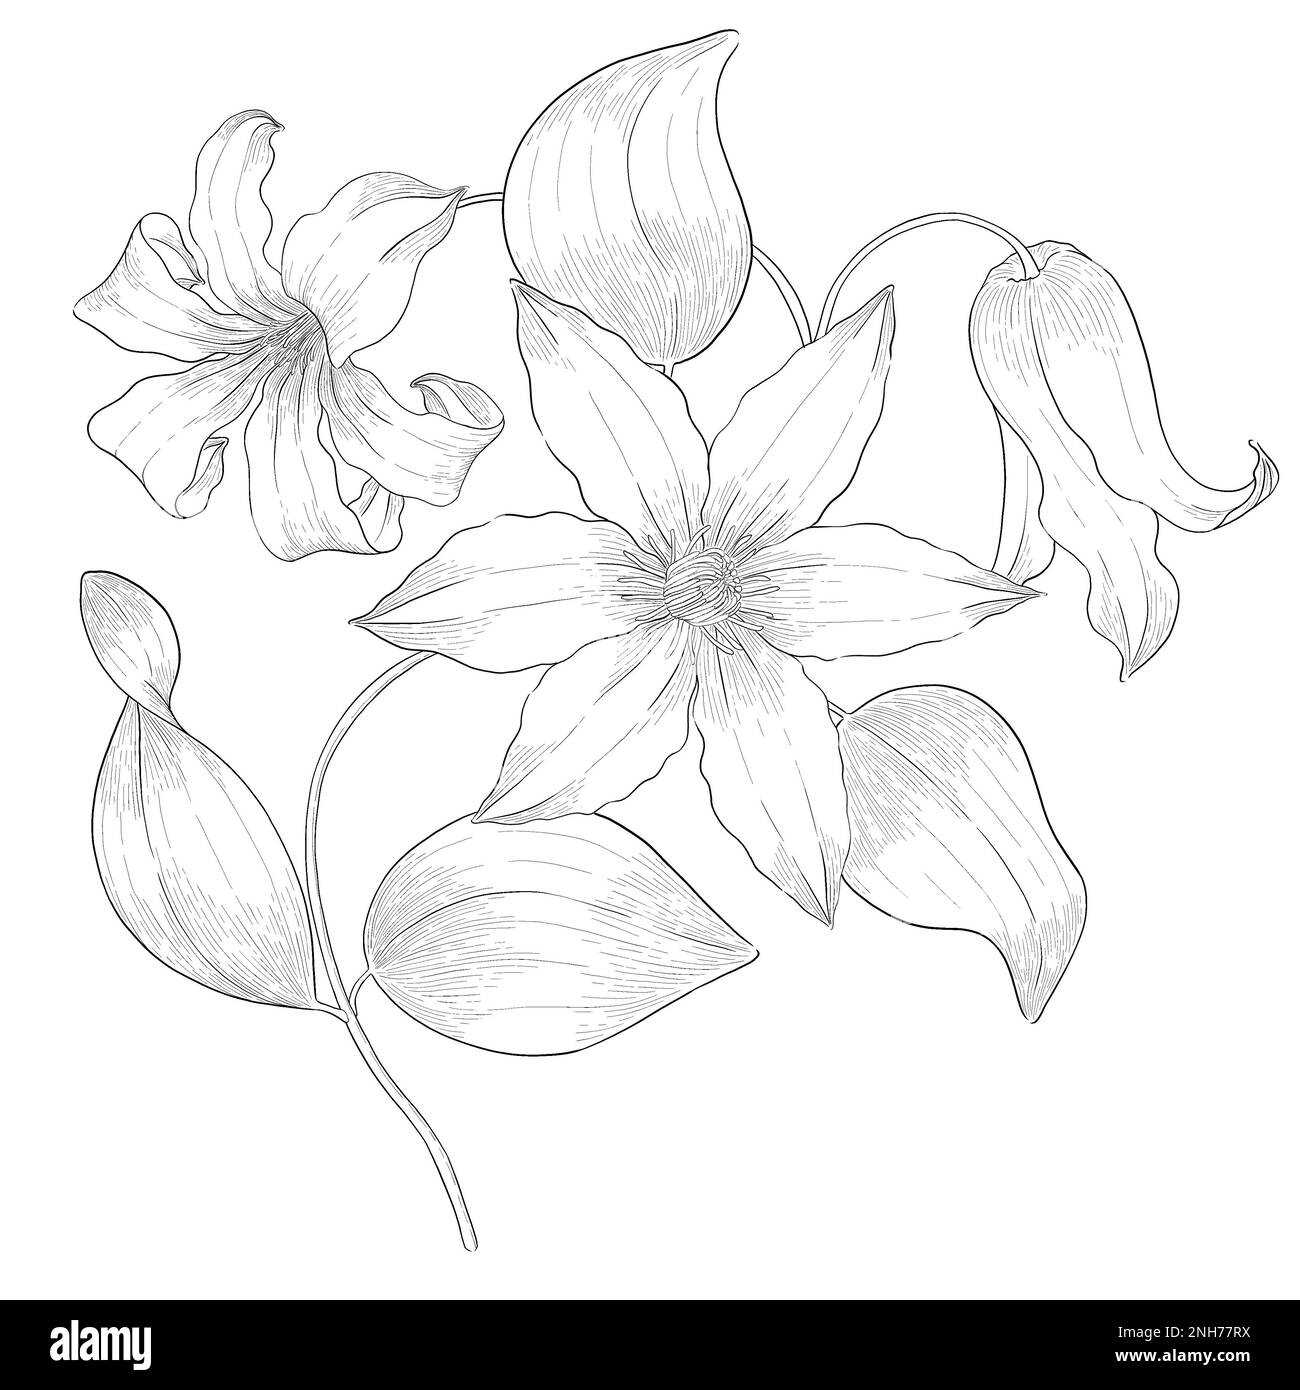 Clematis outline botanical illustration. Line art digitally drawn illustrations. Stock Photo